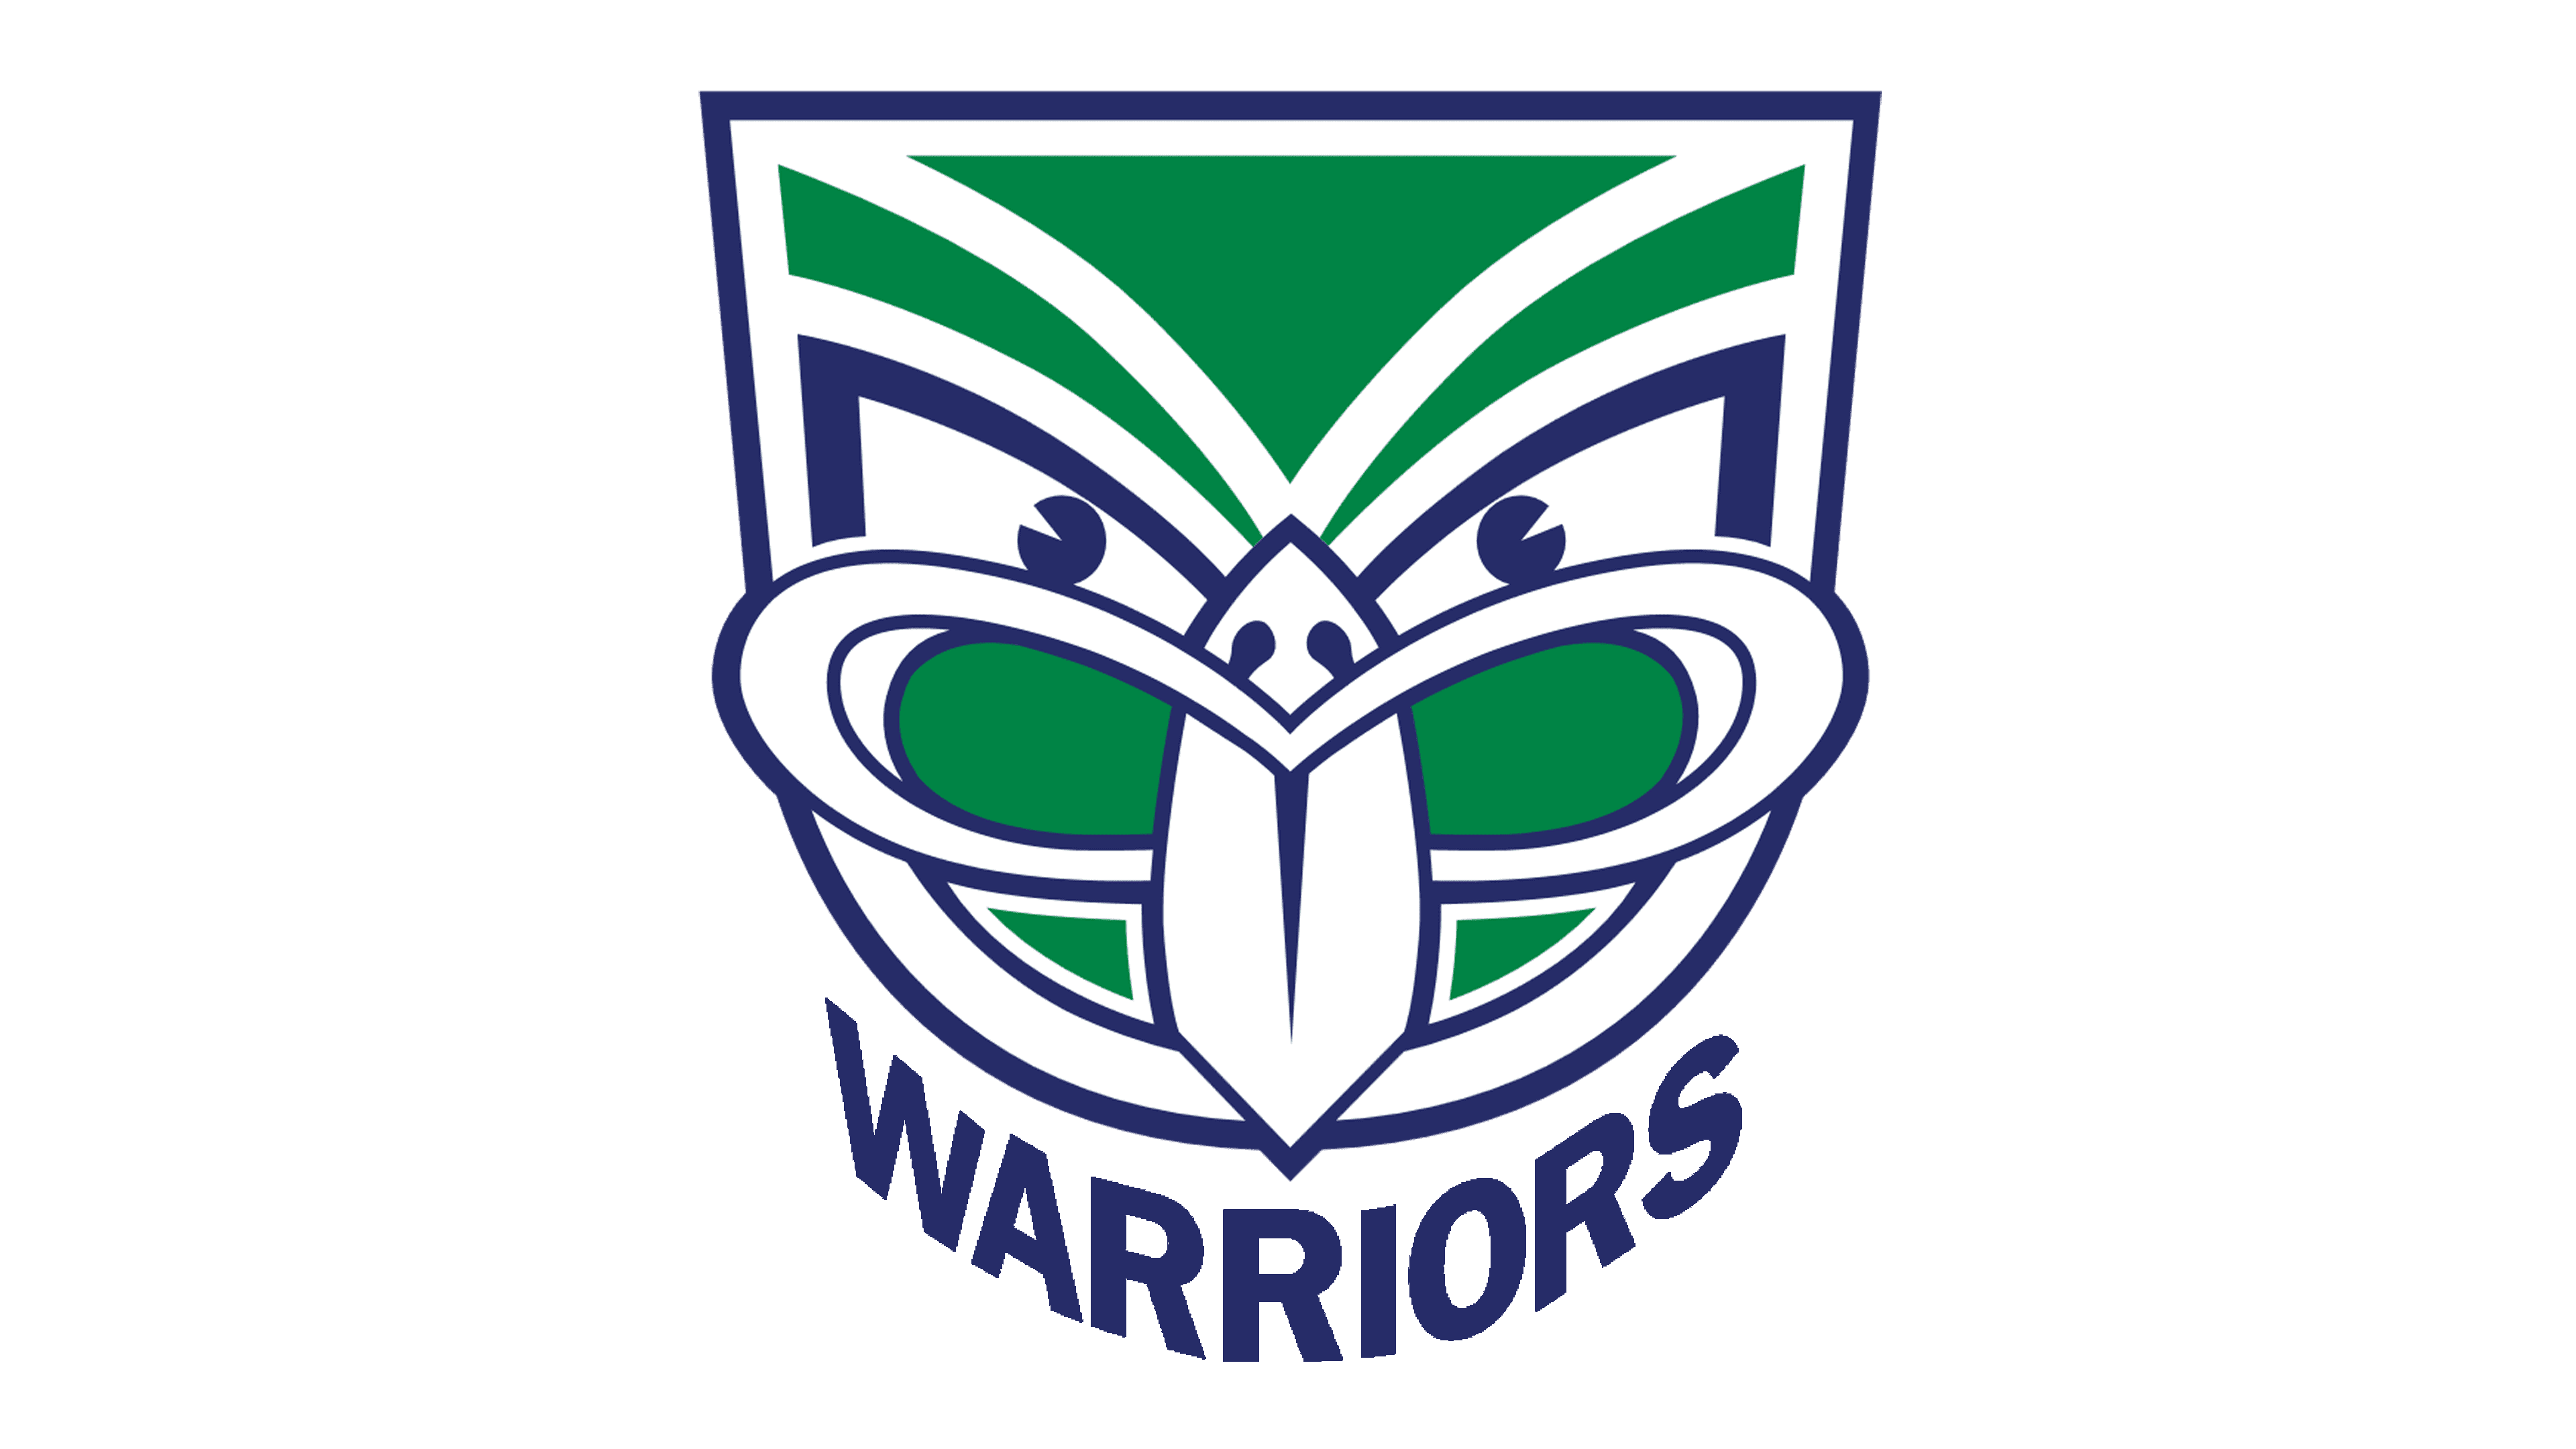 warriors logo png